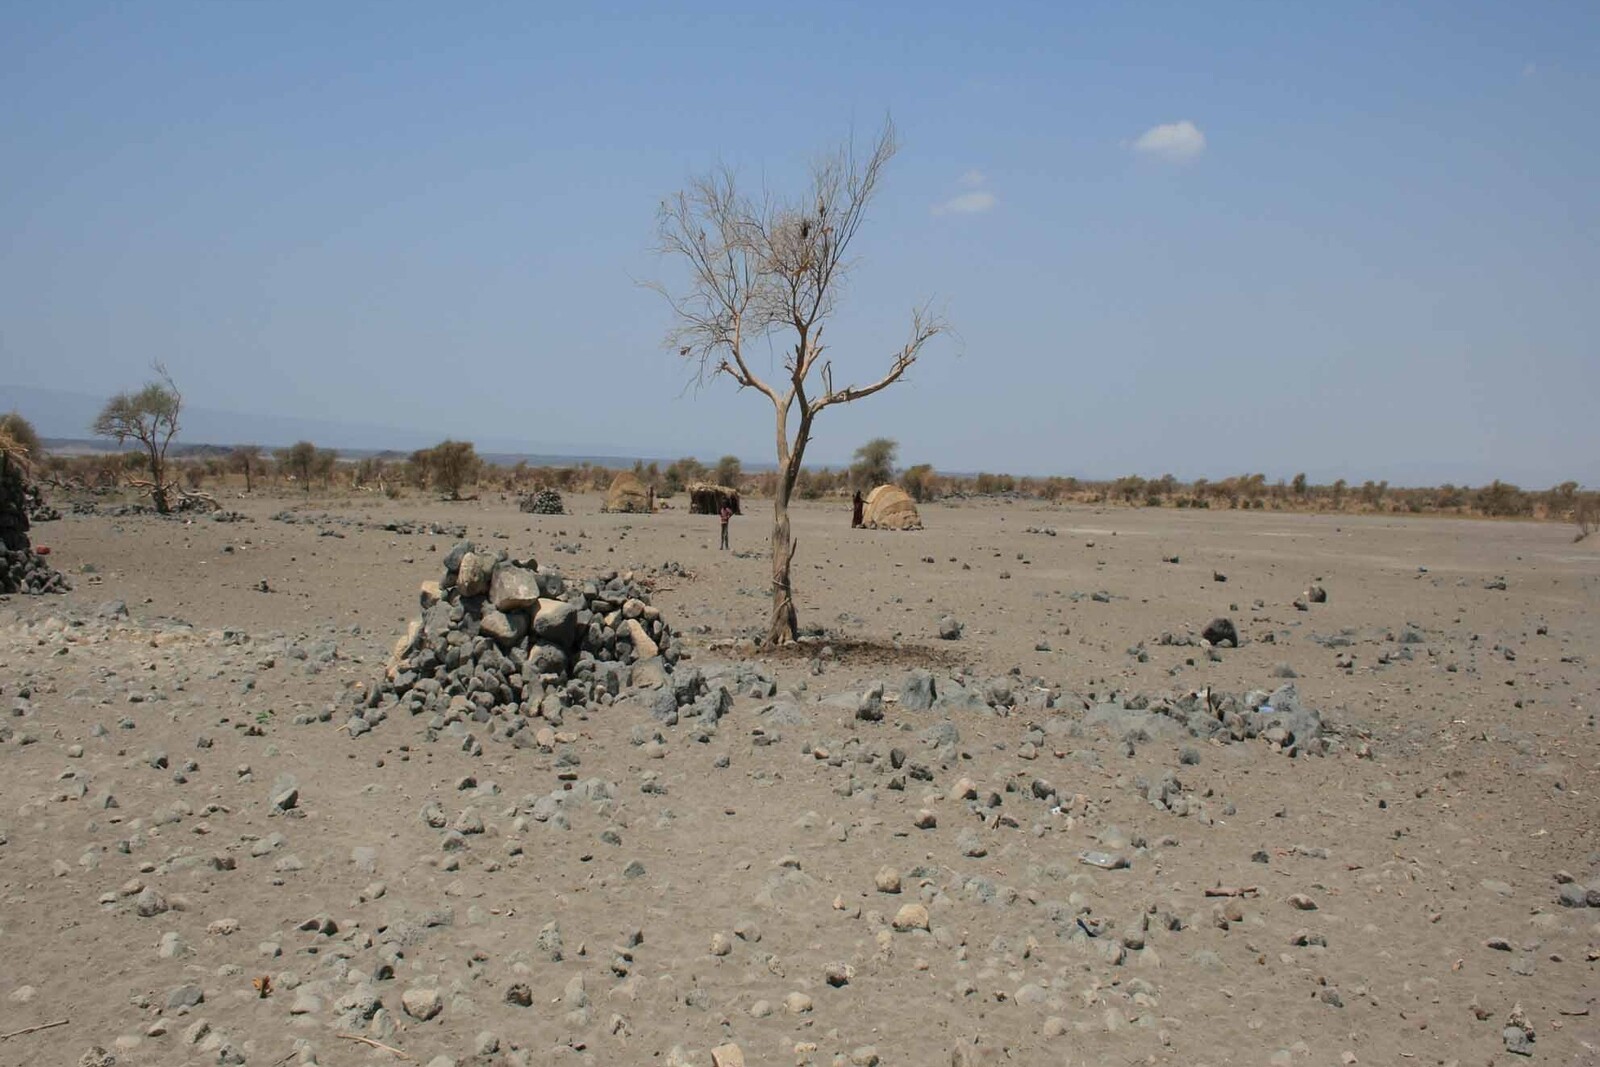 Dürre Ostafrika: Hungersnot Horn von Afrika